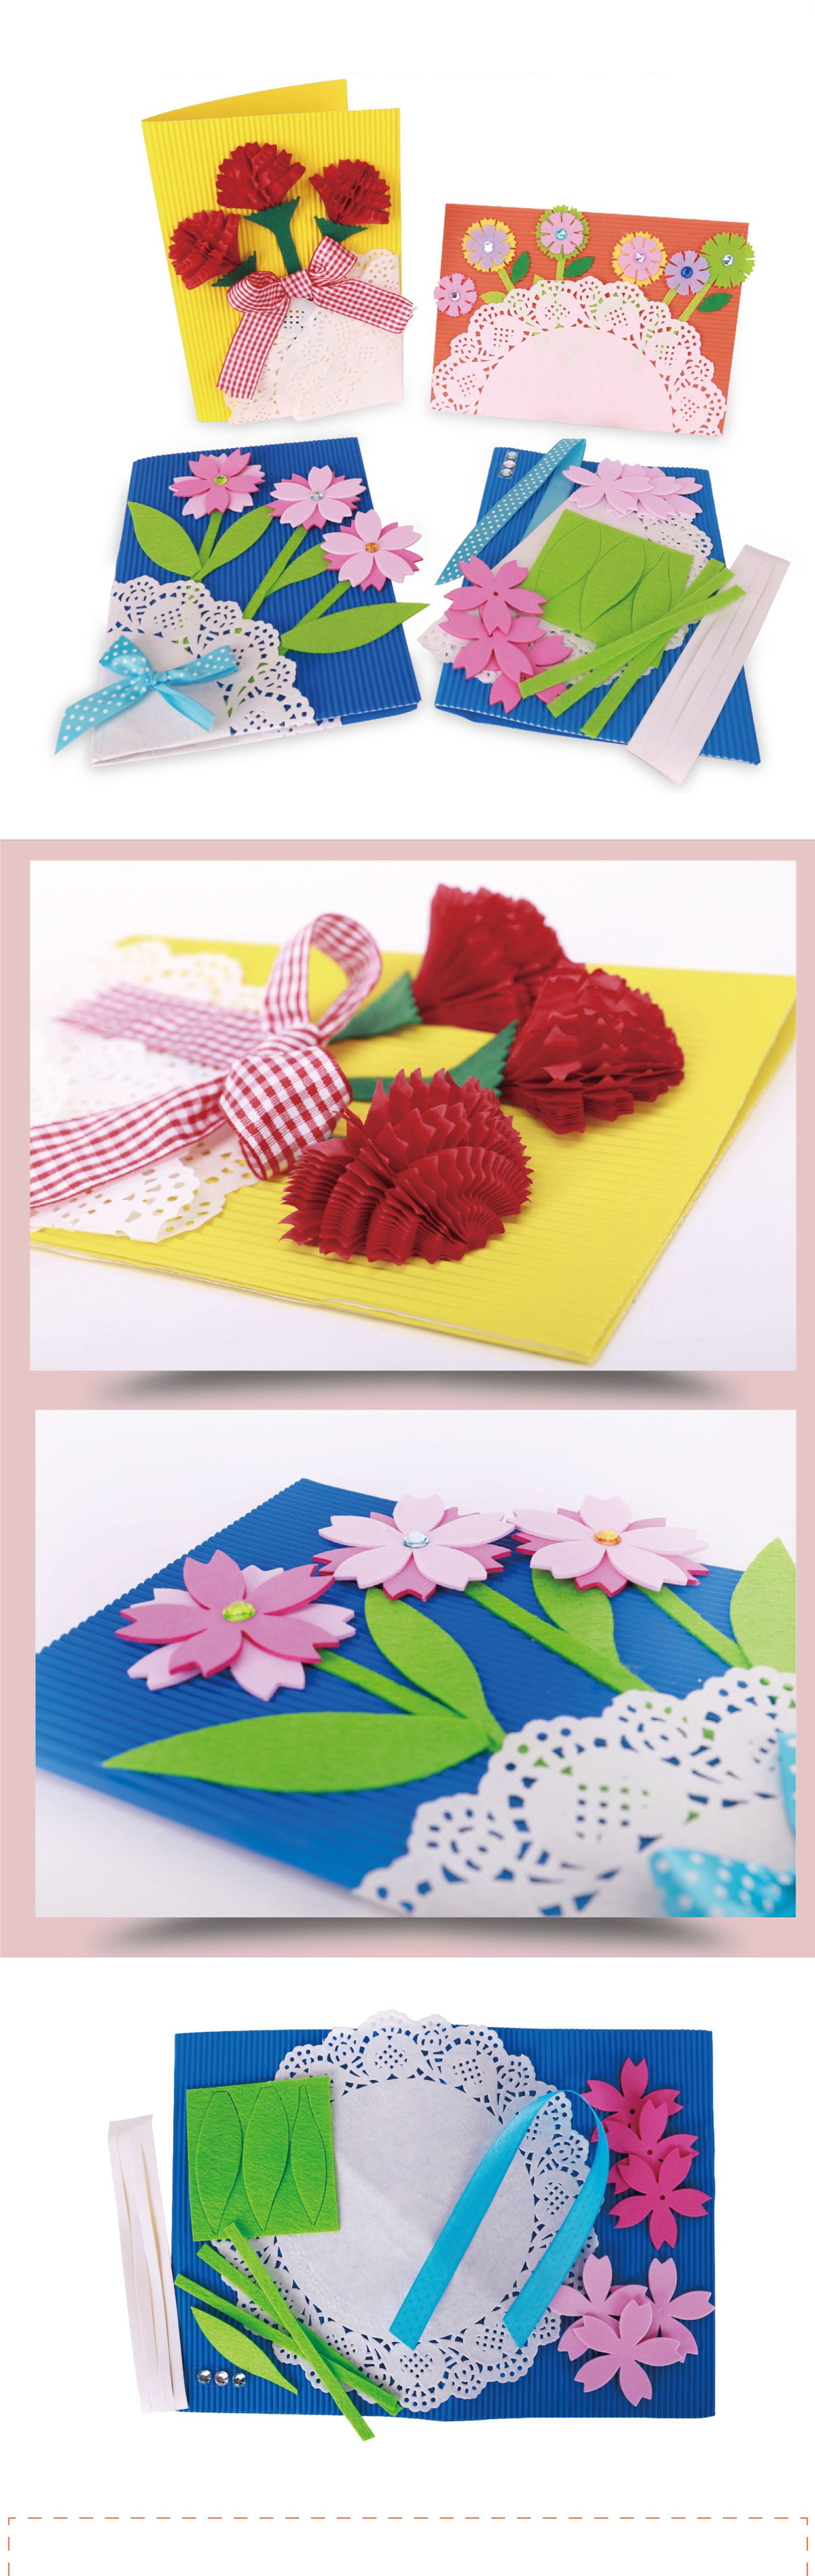 MEIKE-M1418-DIY-Handmade-Mothers-Day-Greeting-Card-Set-Flower-Paper-Anniversary-Birthday-Thanksgivin-1668422-1